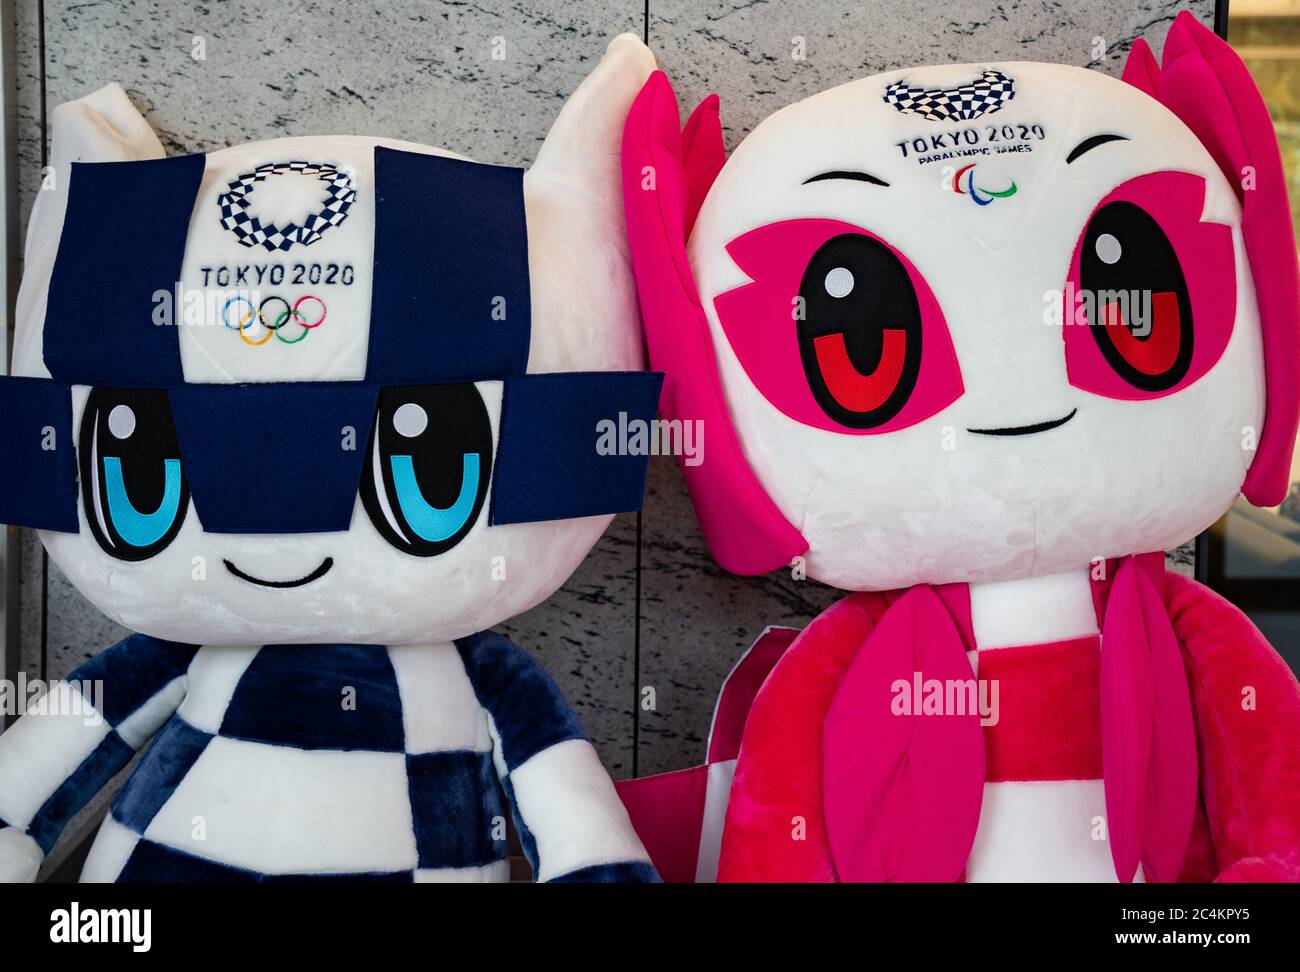 Tokyo 2020 Olympics And Paralympics Games Mascot Miraitowa And Someity Stock Photo Alamy